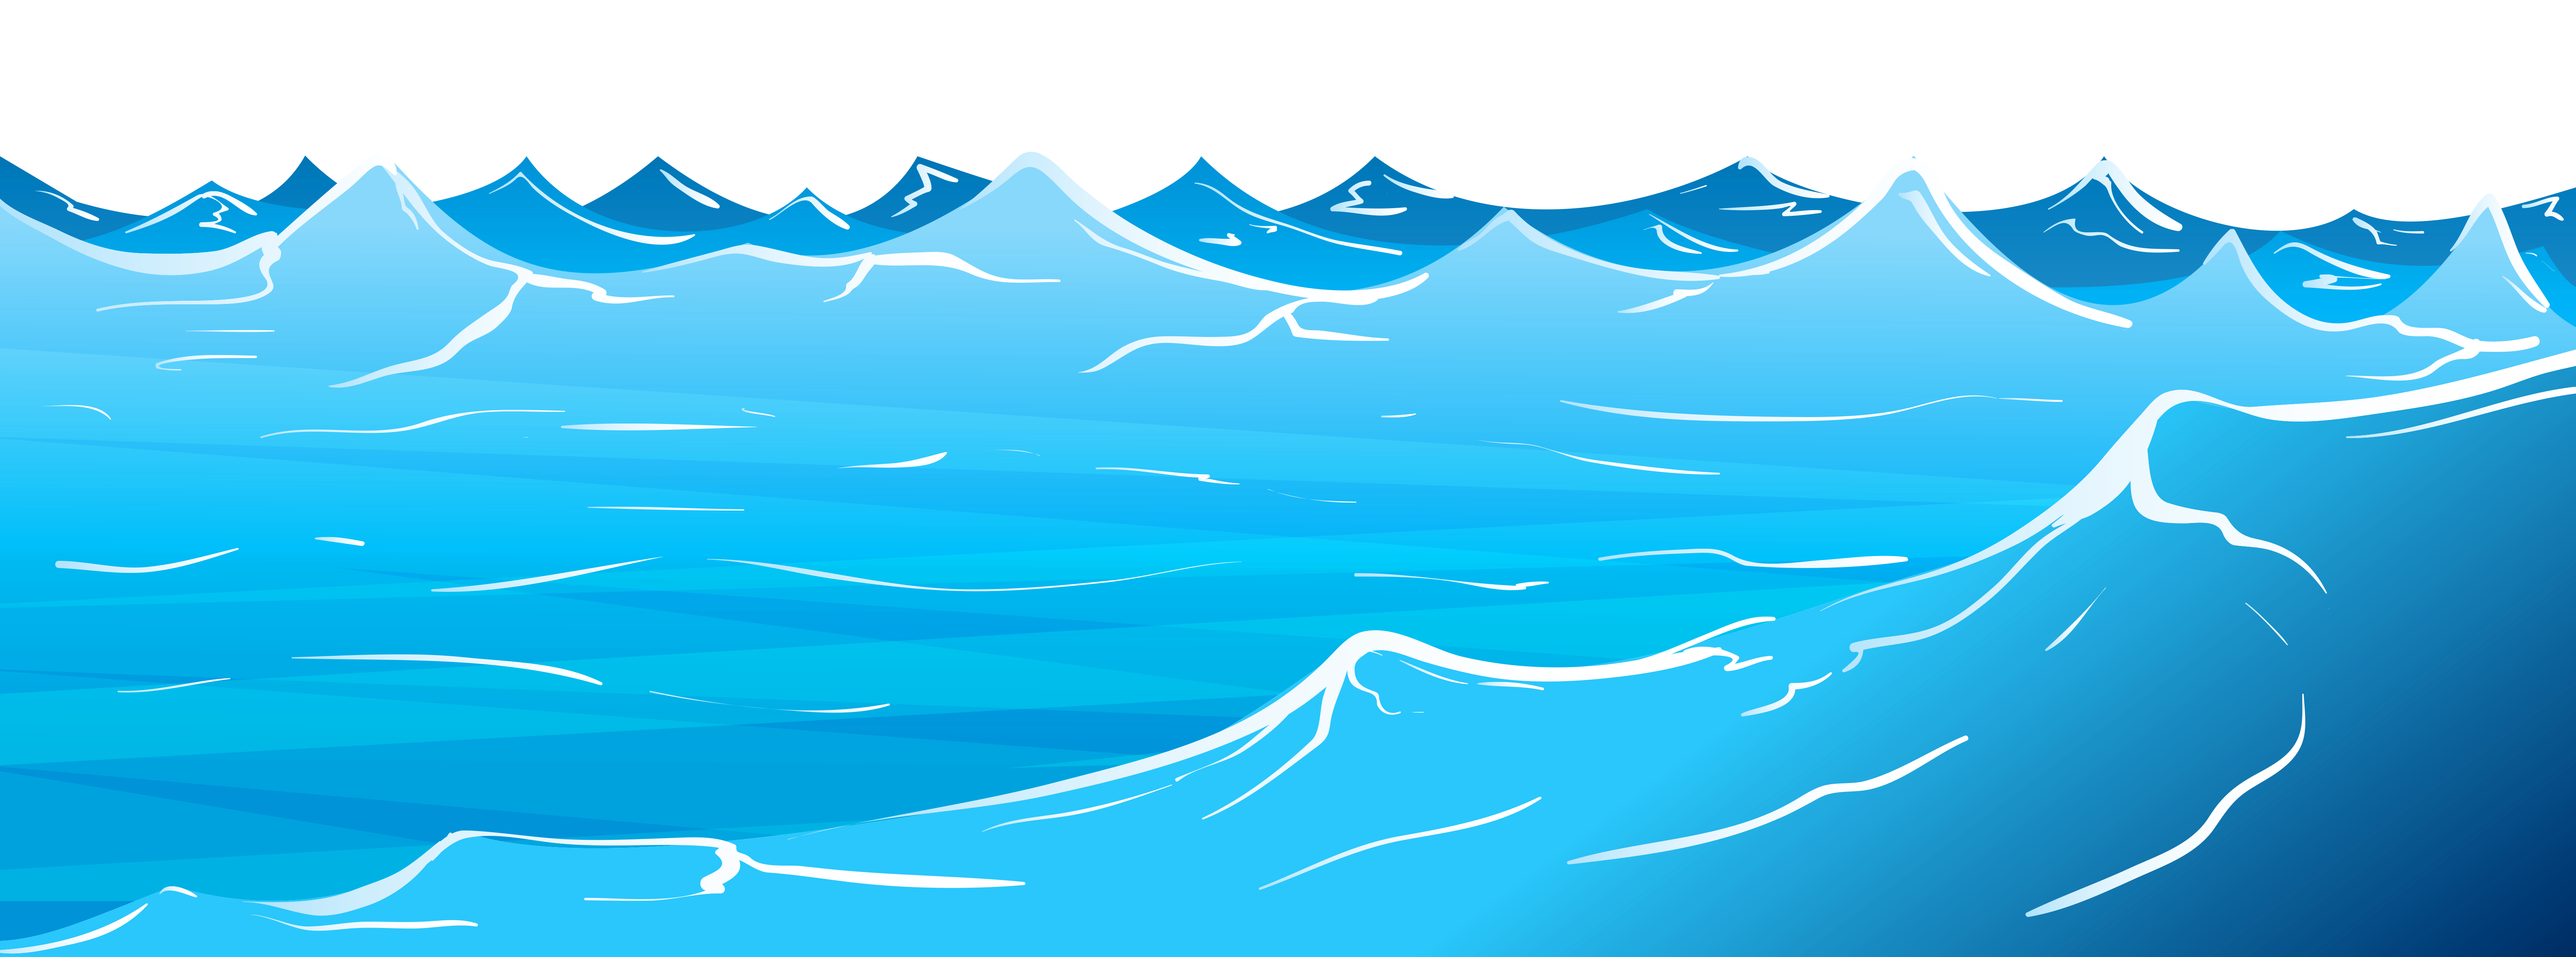 Water wave clip art